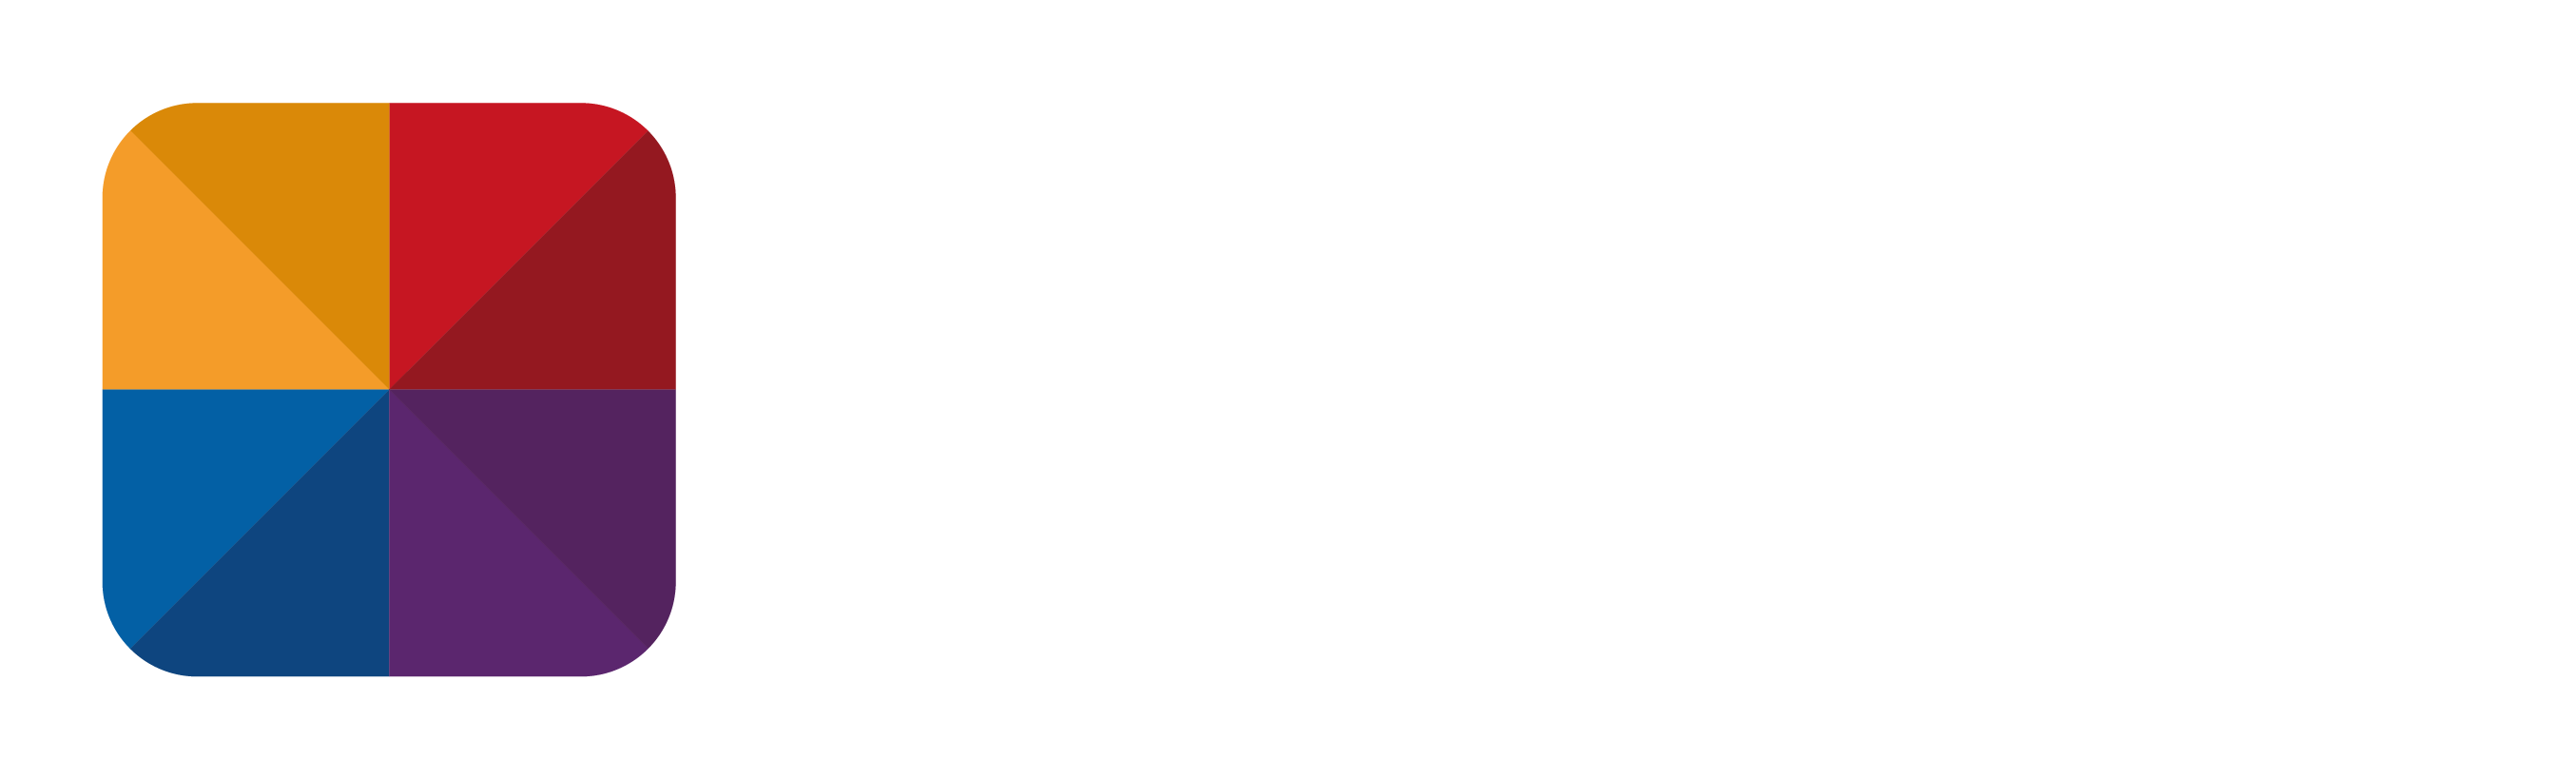 croner-i-logo